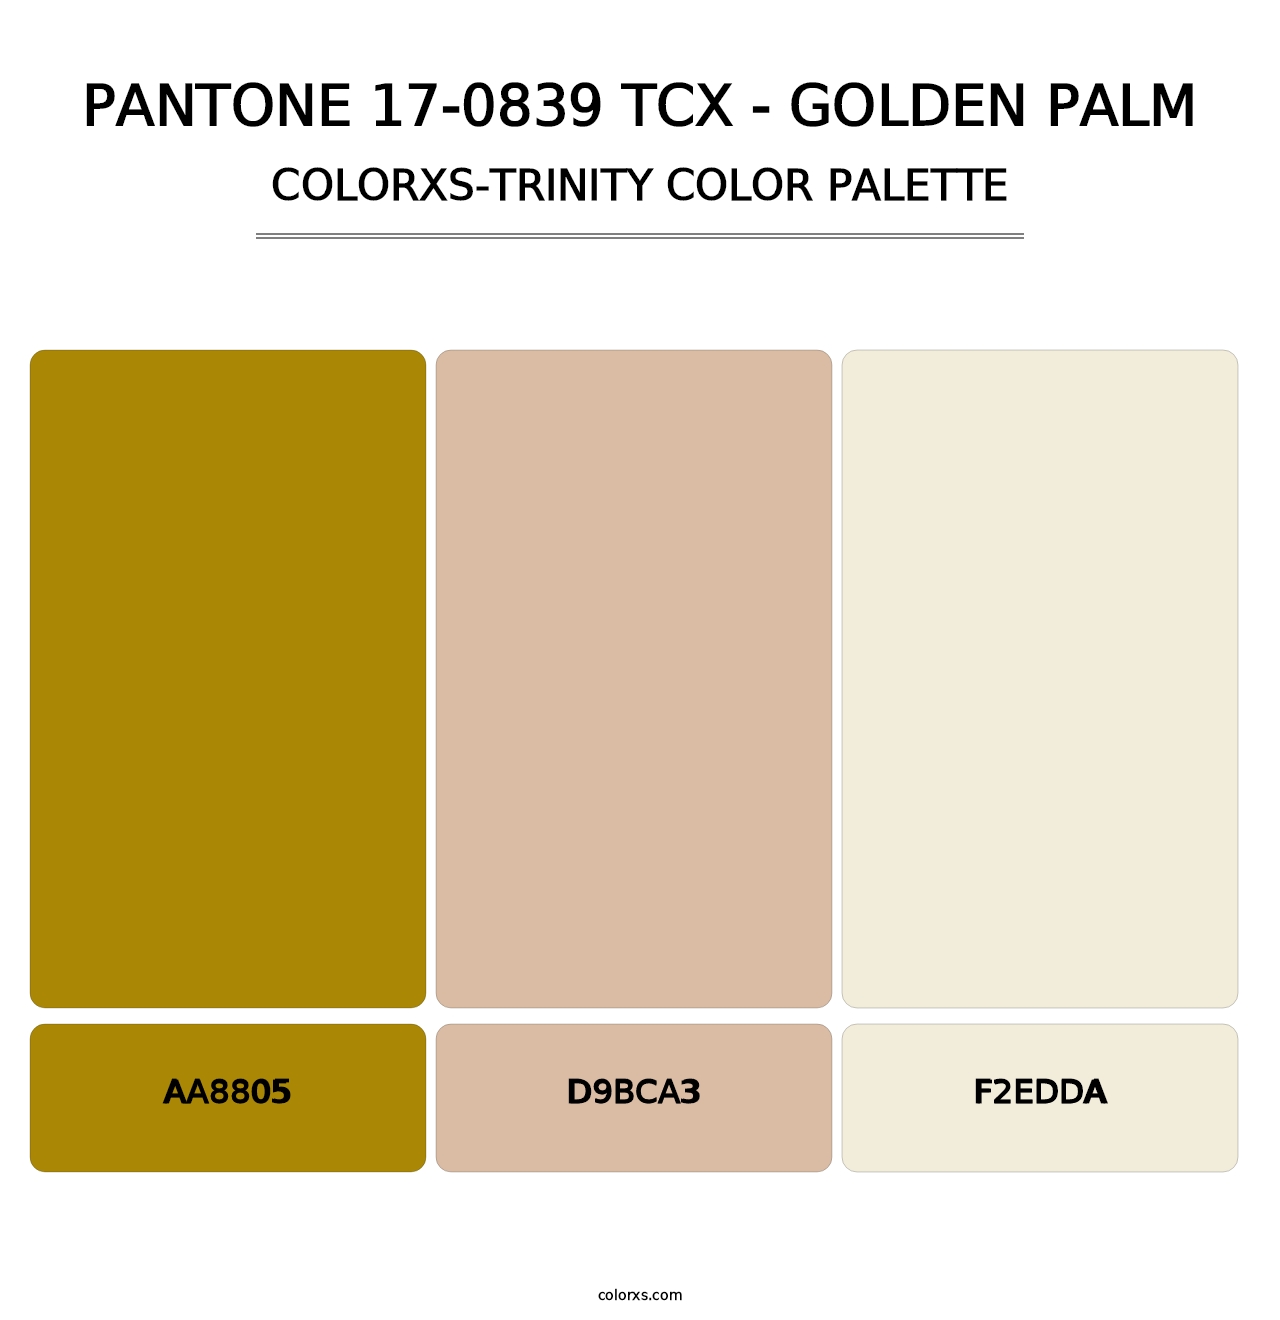 PANTONE 17-0839 TCX - Golden Palm - Colorxs Trinity Palette